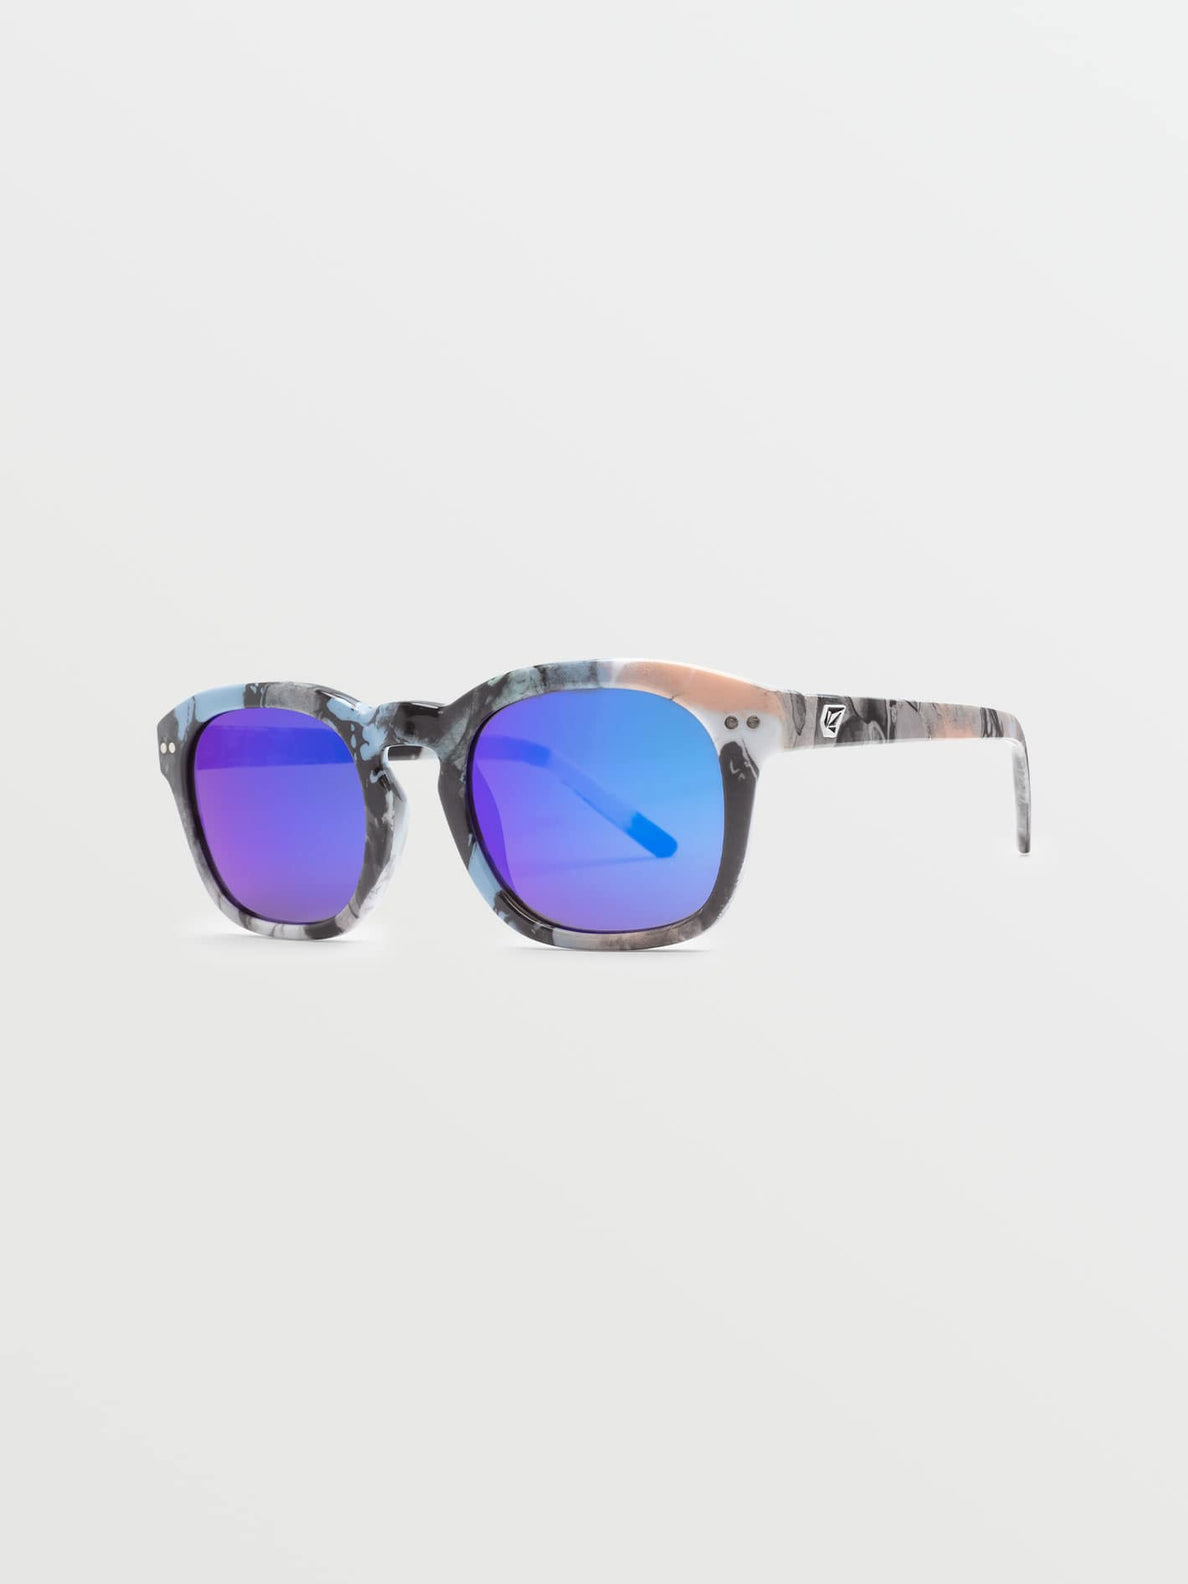 Earth Tripper Sunglasses - Skulls/Blue Mirror